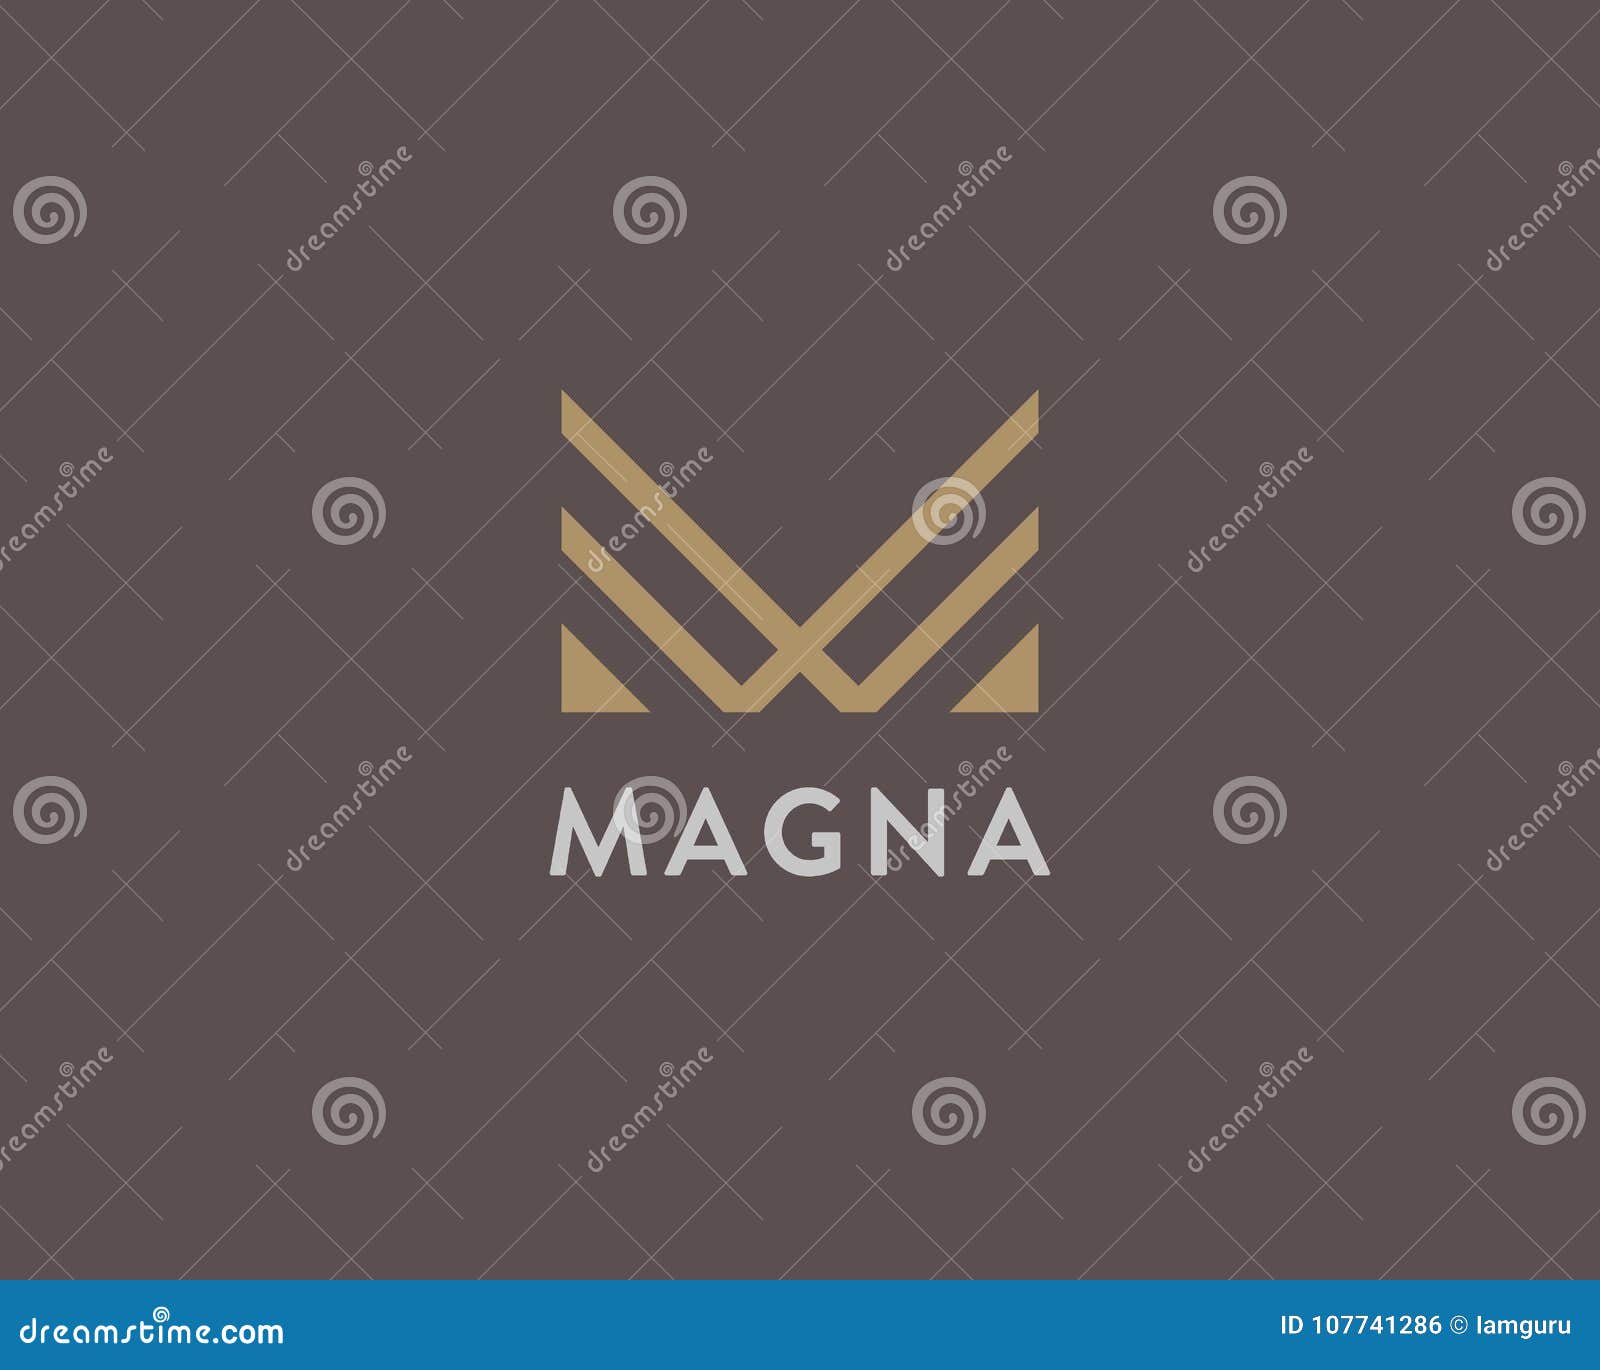 Premium Vector  King crown letter m or mm m monogram logo